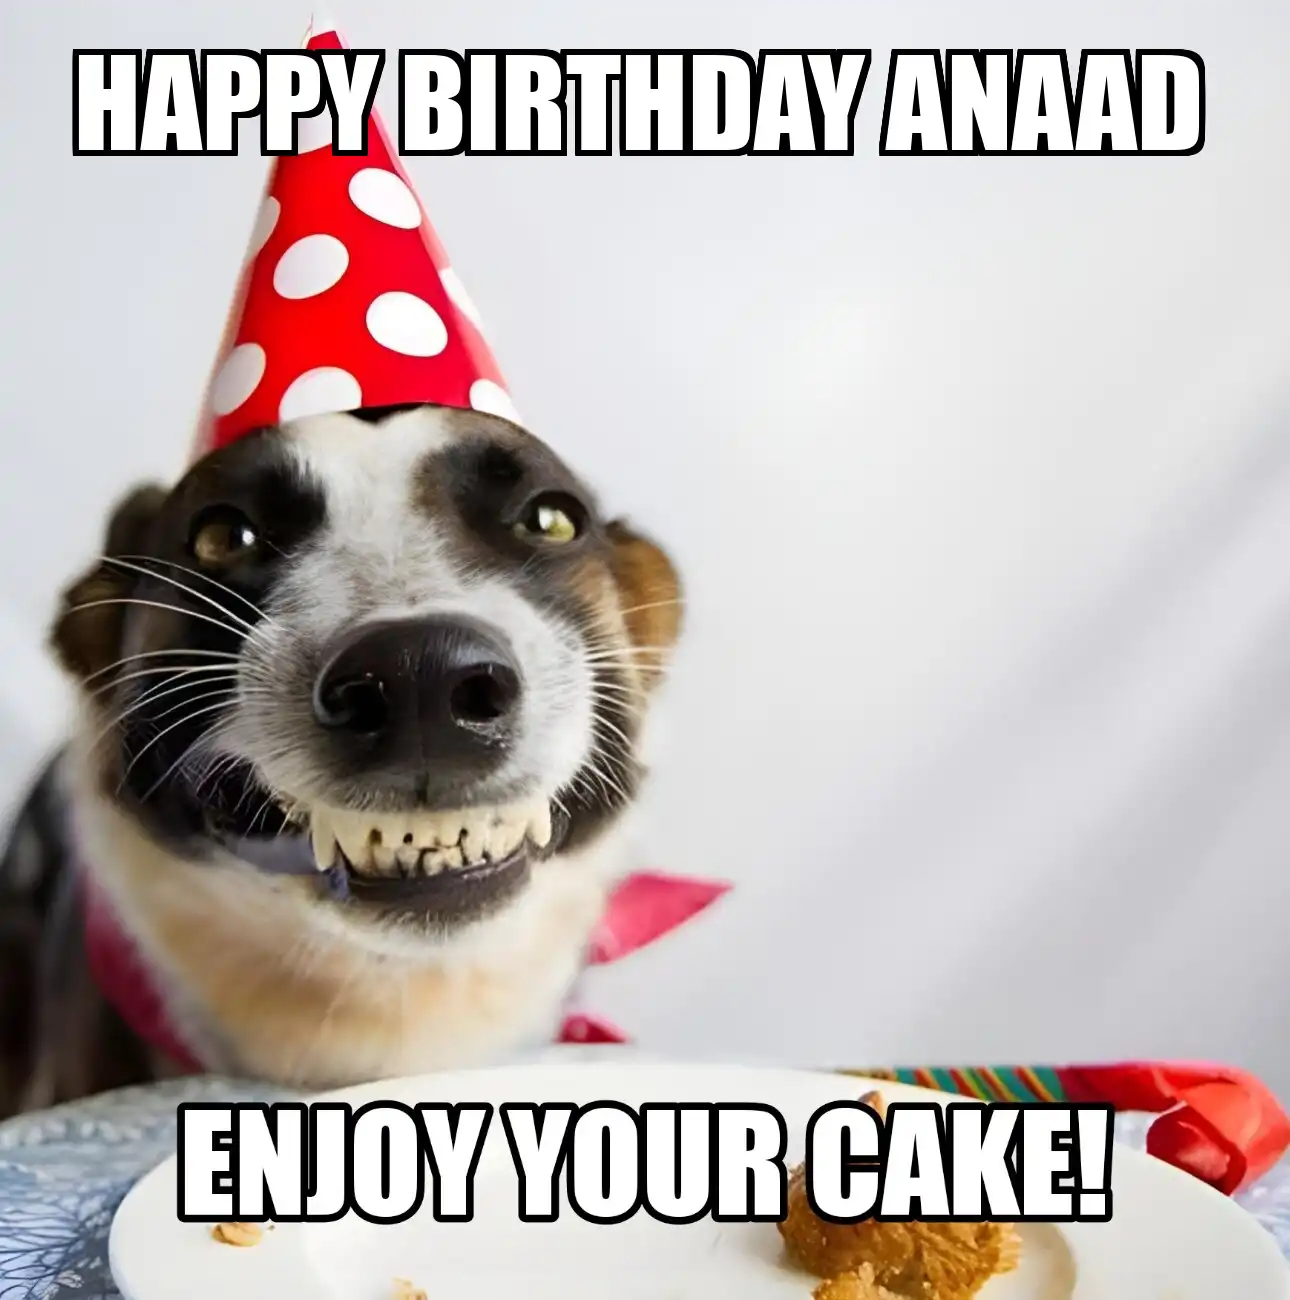 Happy Birthday Anaad Enjoy Your Cake Dog Meme